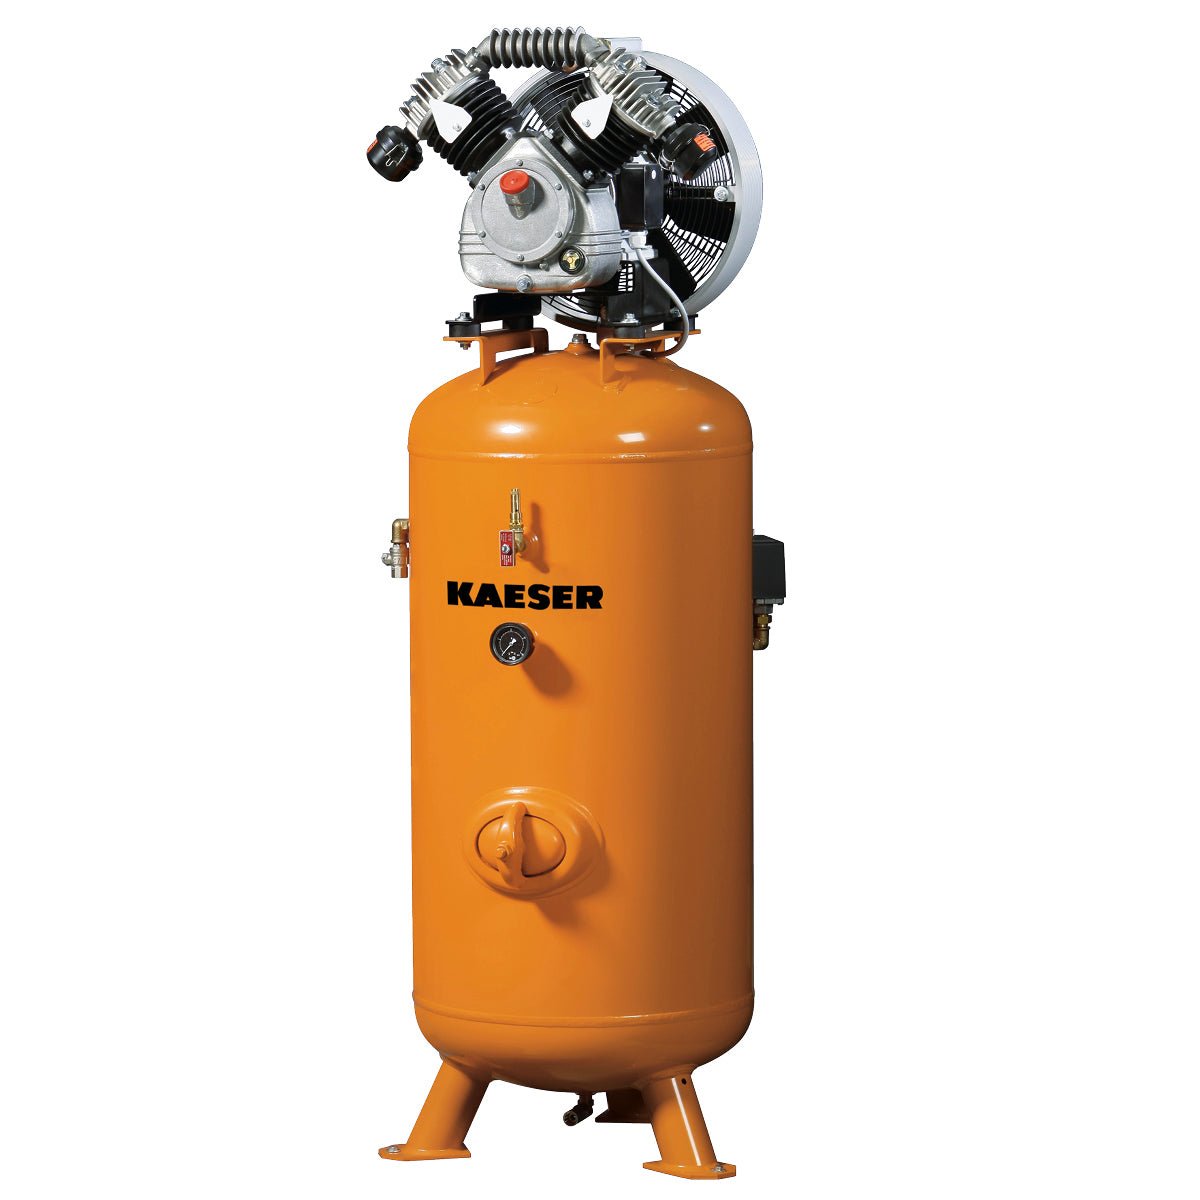 Kaeser piston compressor EPC 630-250 St 